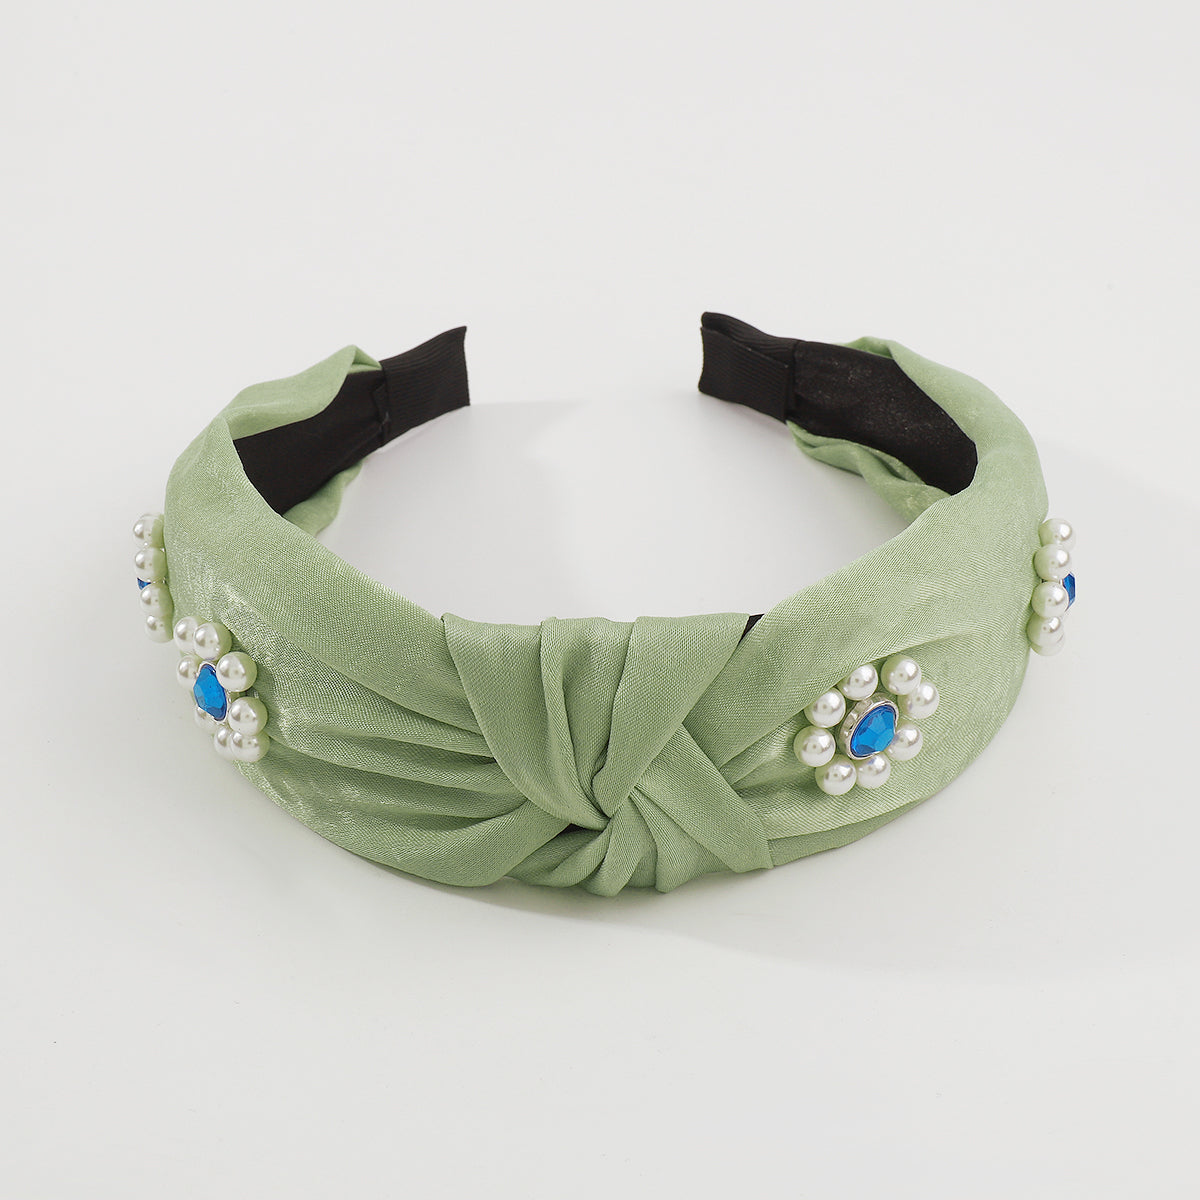 Handmade Flower Pearl Rhinestone Knot Headbands medyjewelry